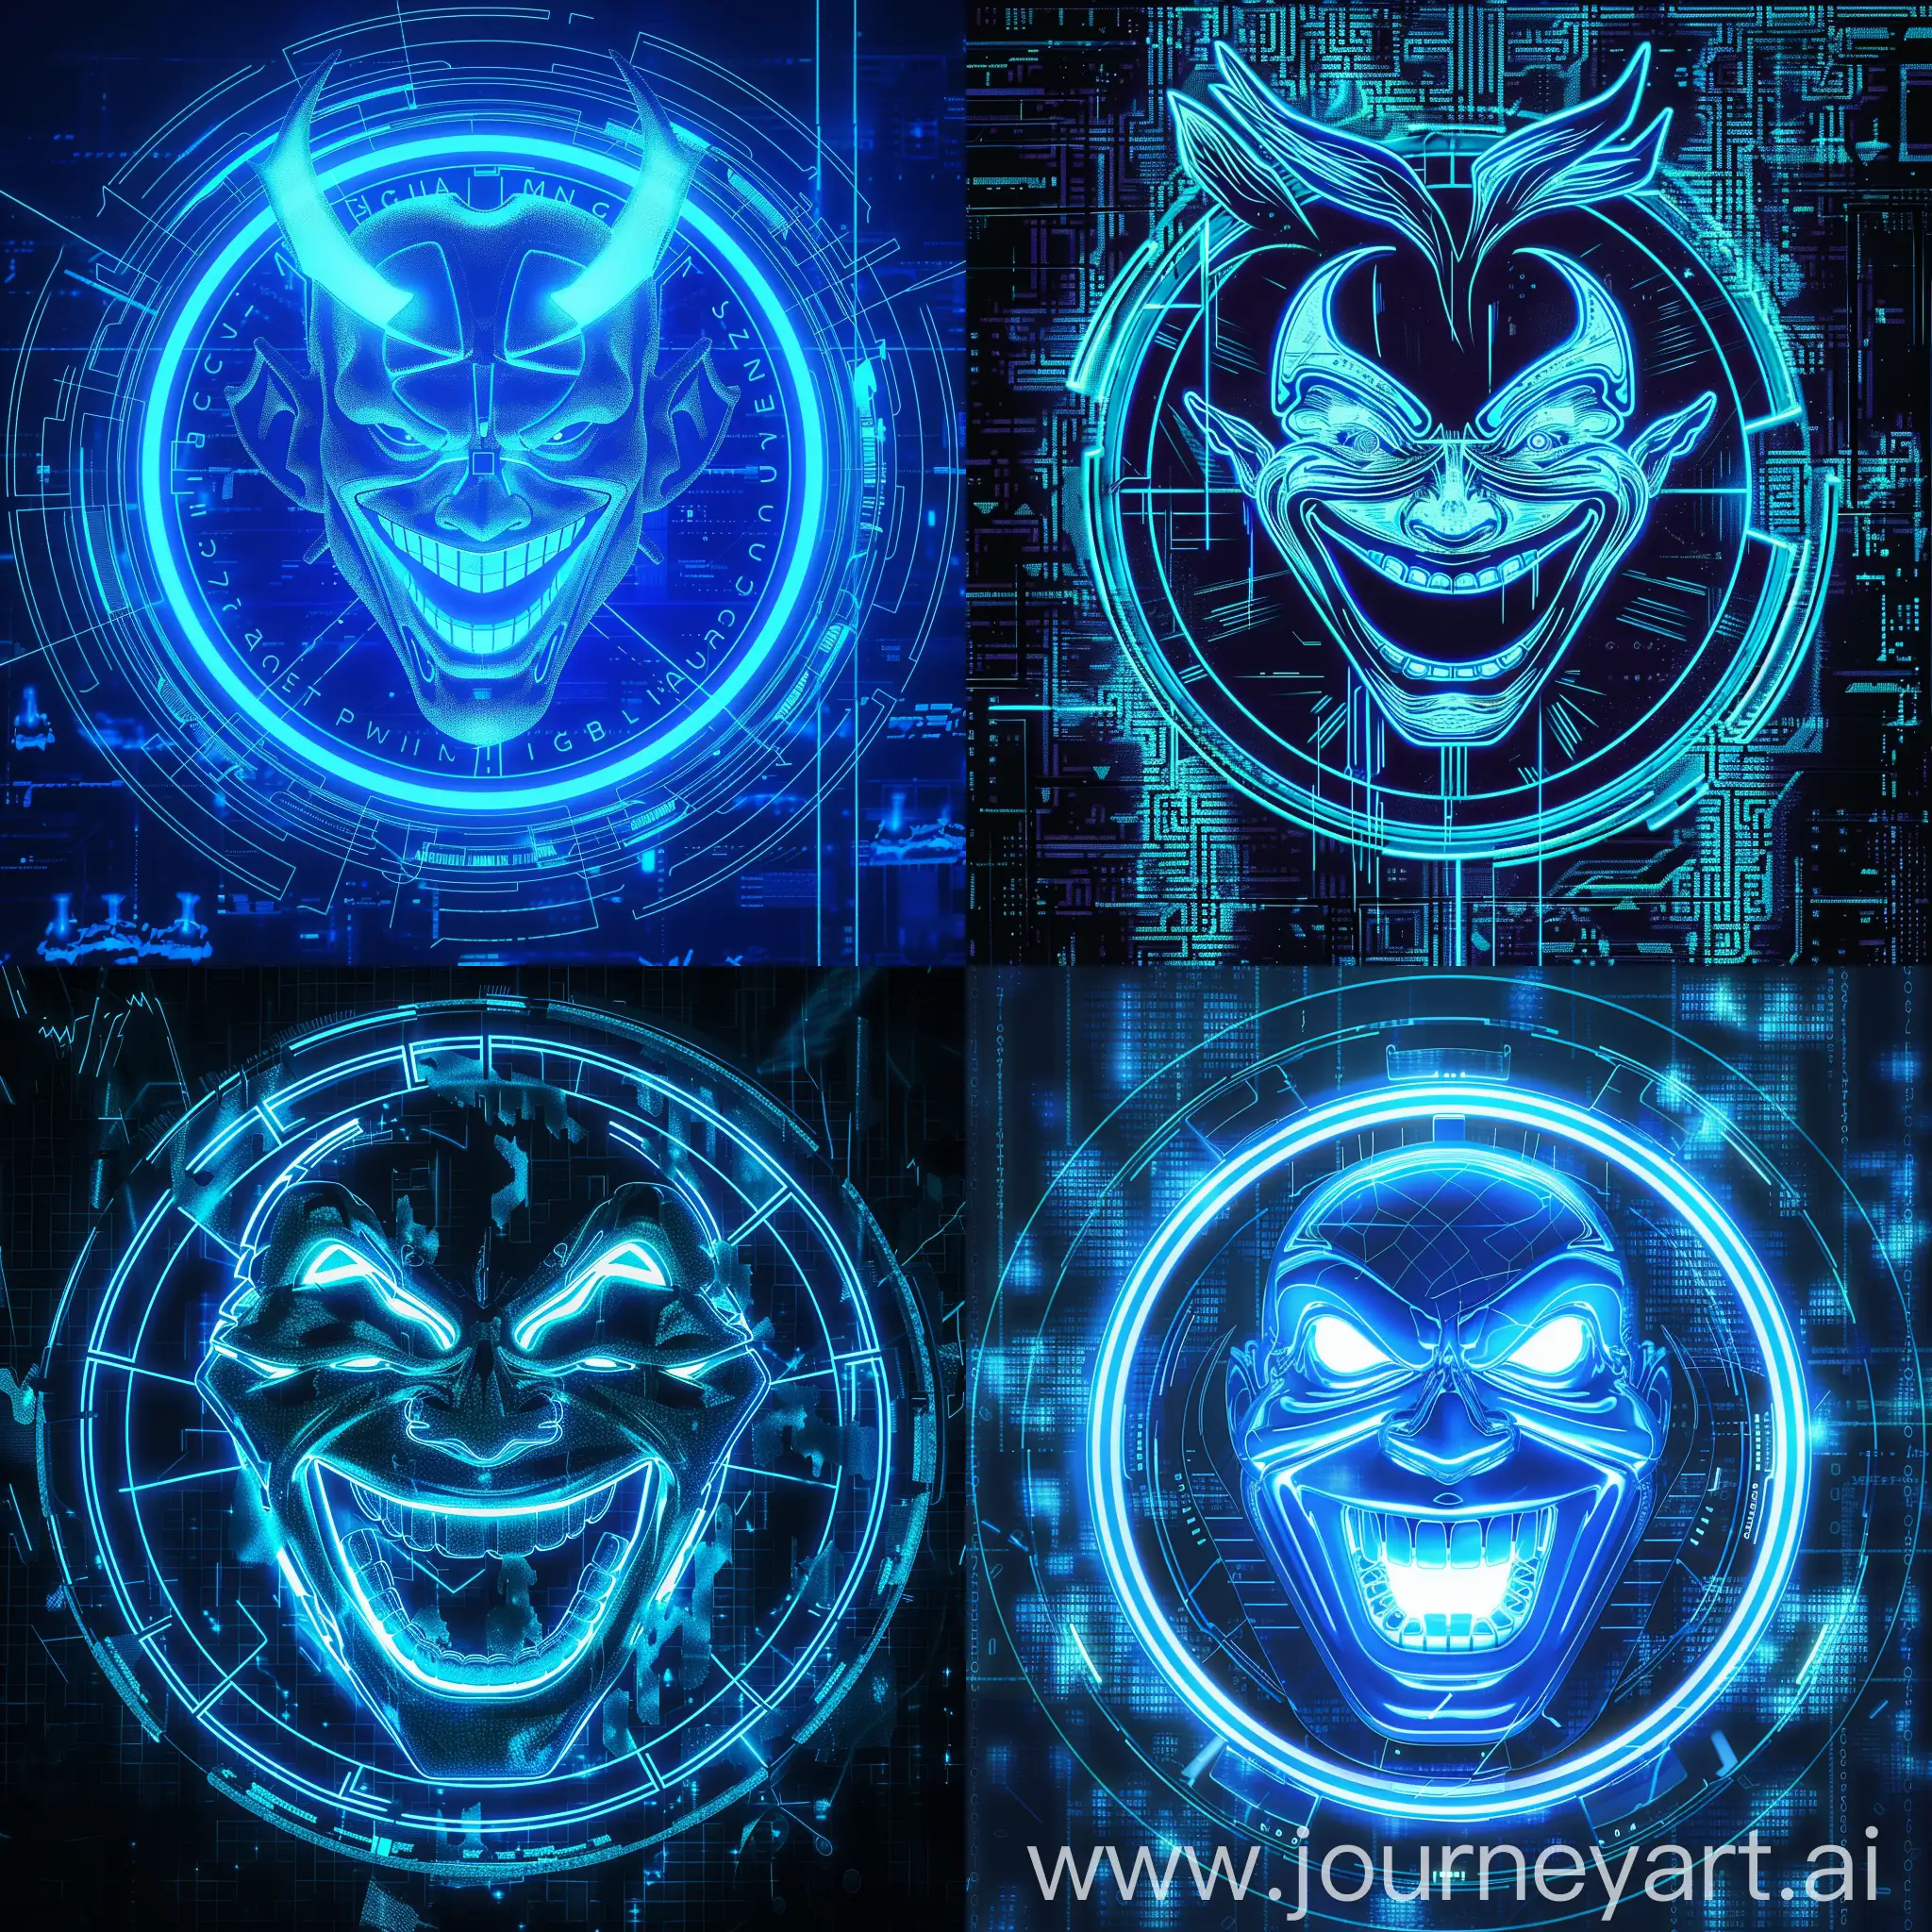 Neon-Blue-Laughing-Man-Logo-Wallpaper-with-Matrix-Background